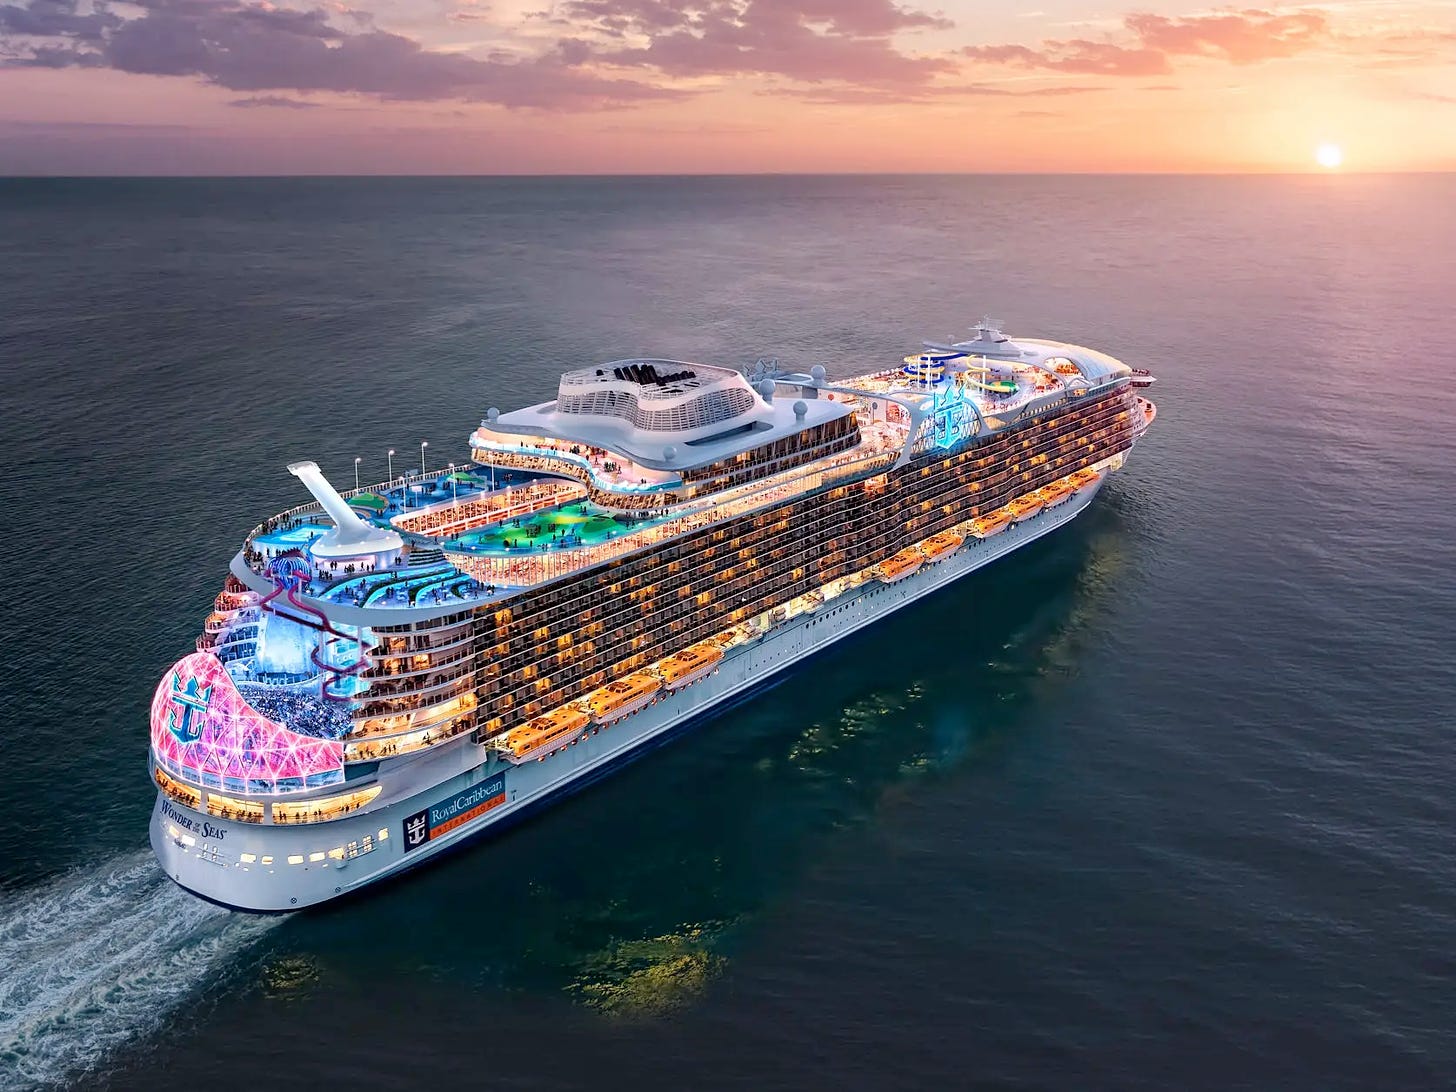 A massive Royal Caribbean cruise ship heading into the sunset